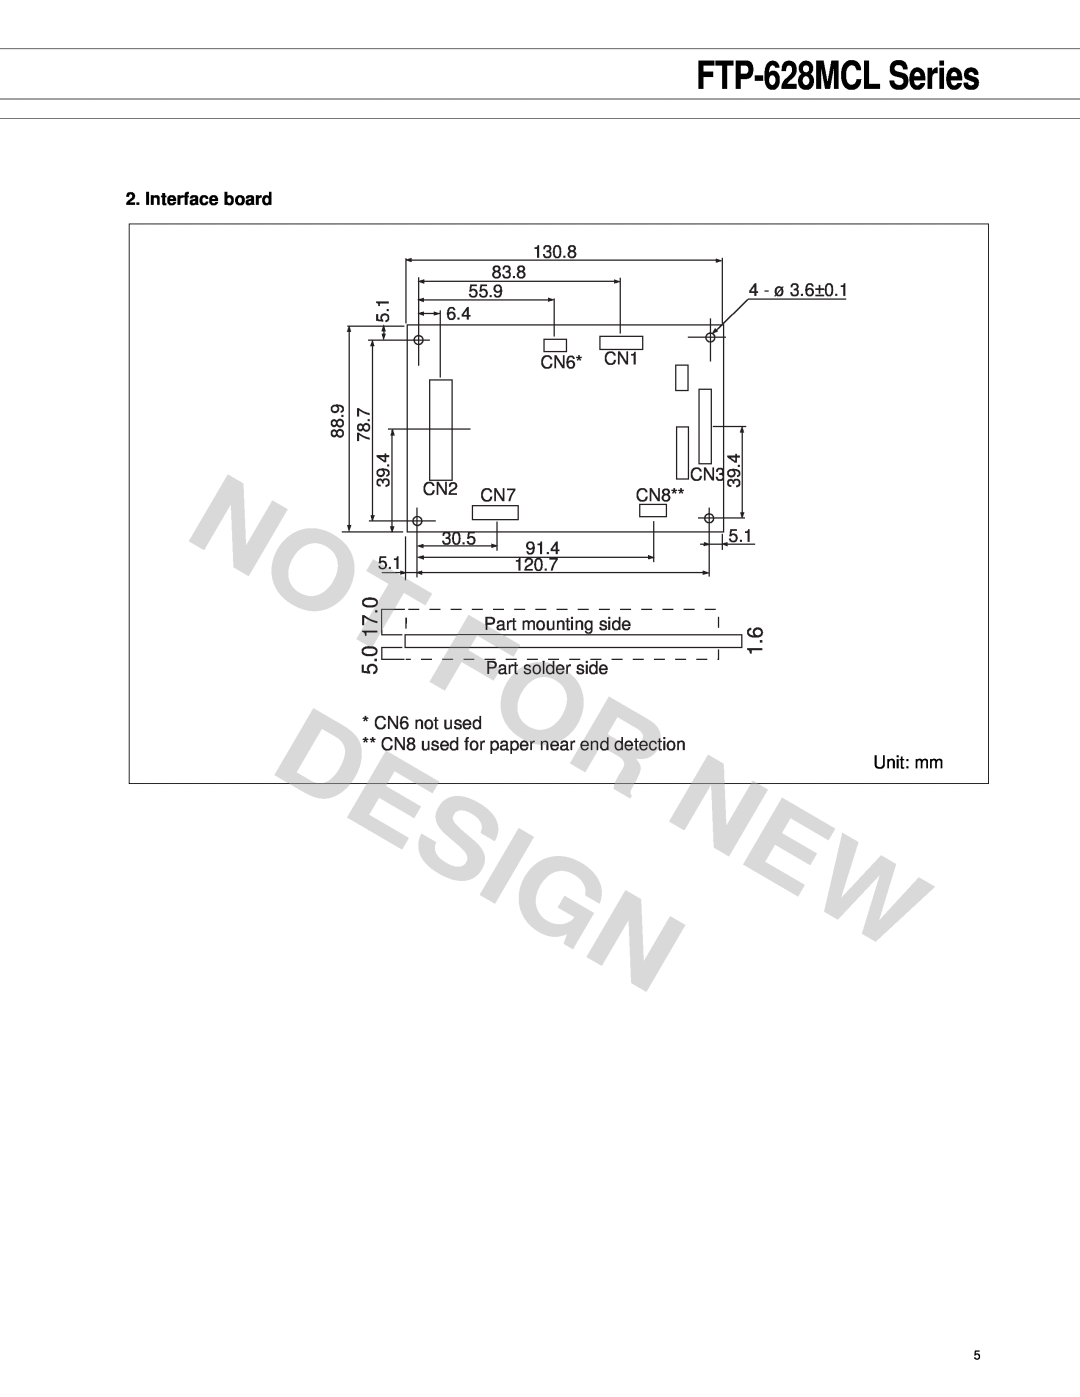 Fujitsu FTP-628 Series manual Designnew, Interface board, FTP-628MCL Series, 17.0 